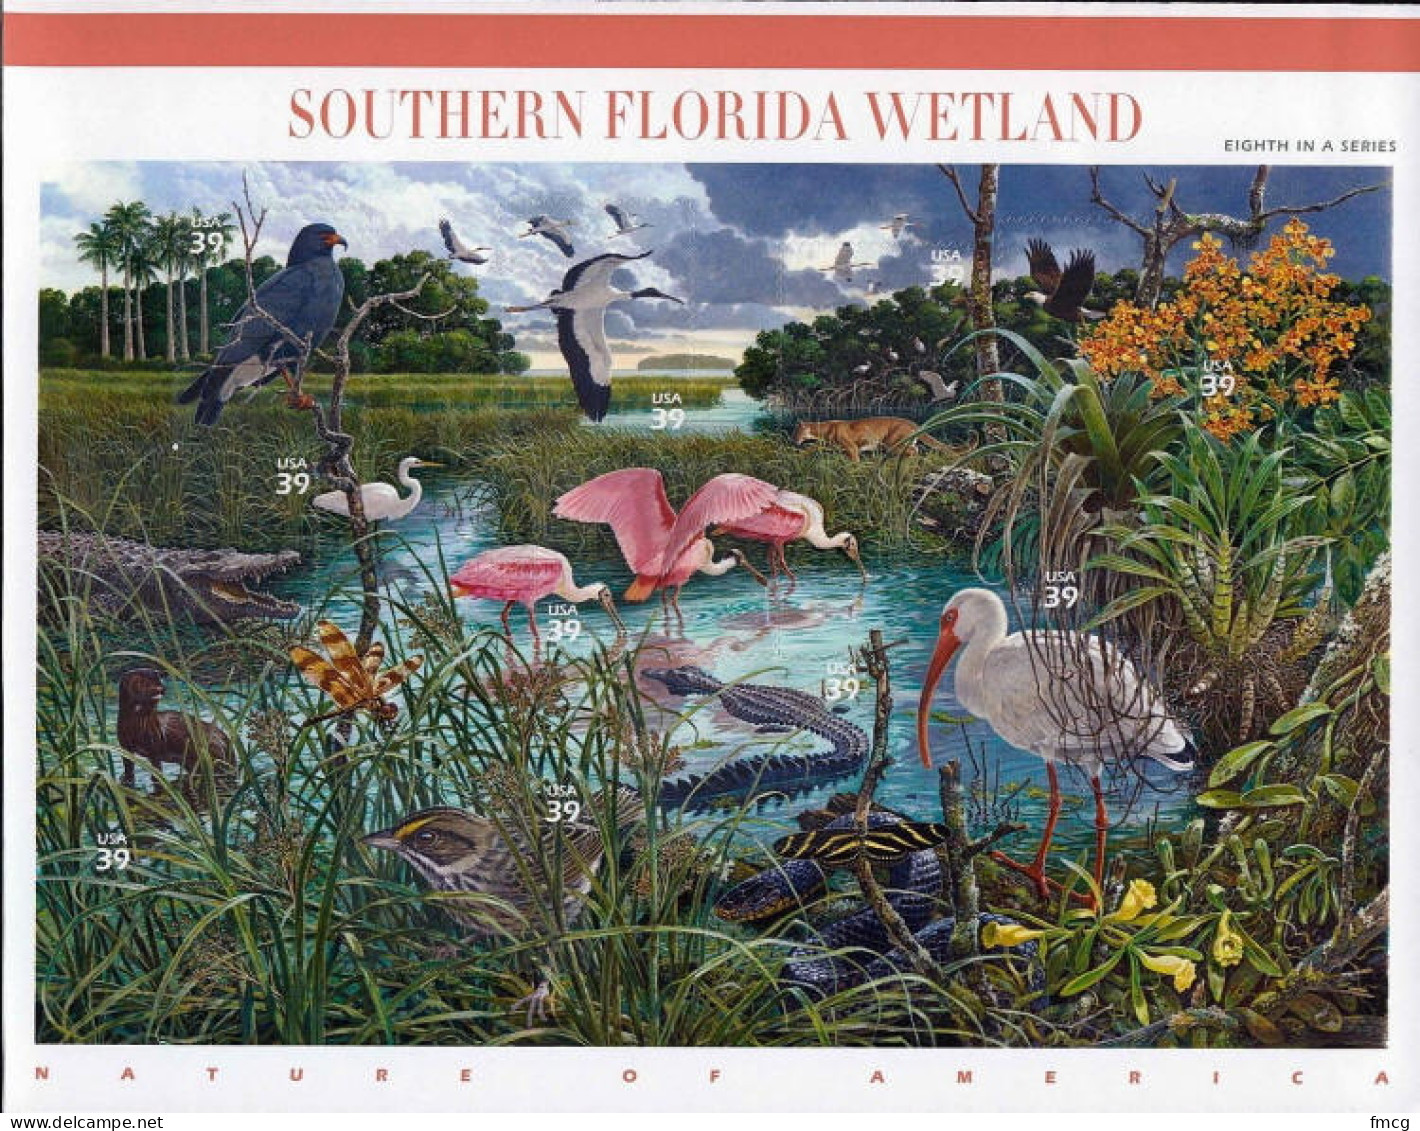 2006 Southern Florida Wetland, 10 Stamps, Mint Never Hinged - Ongebruikt